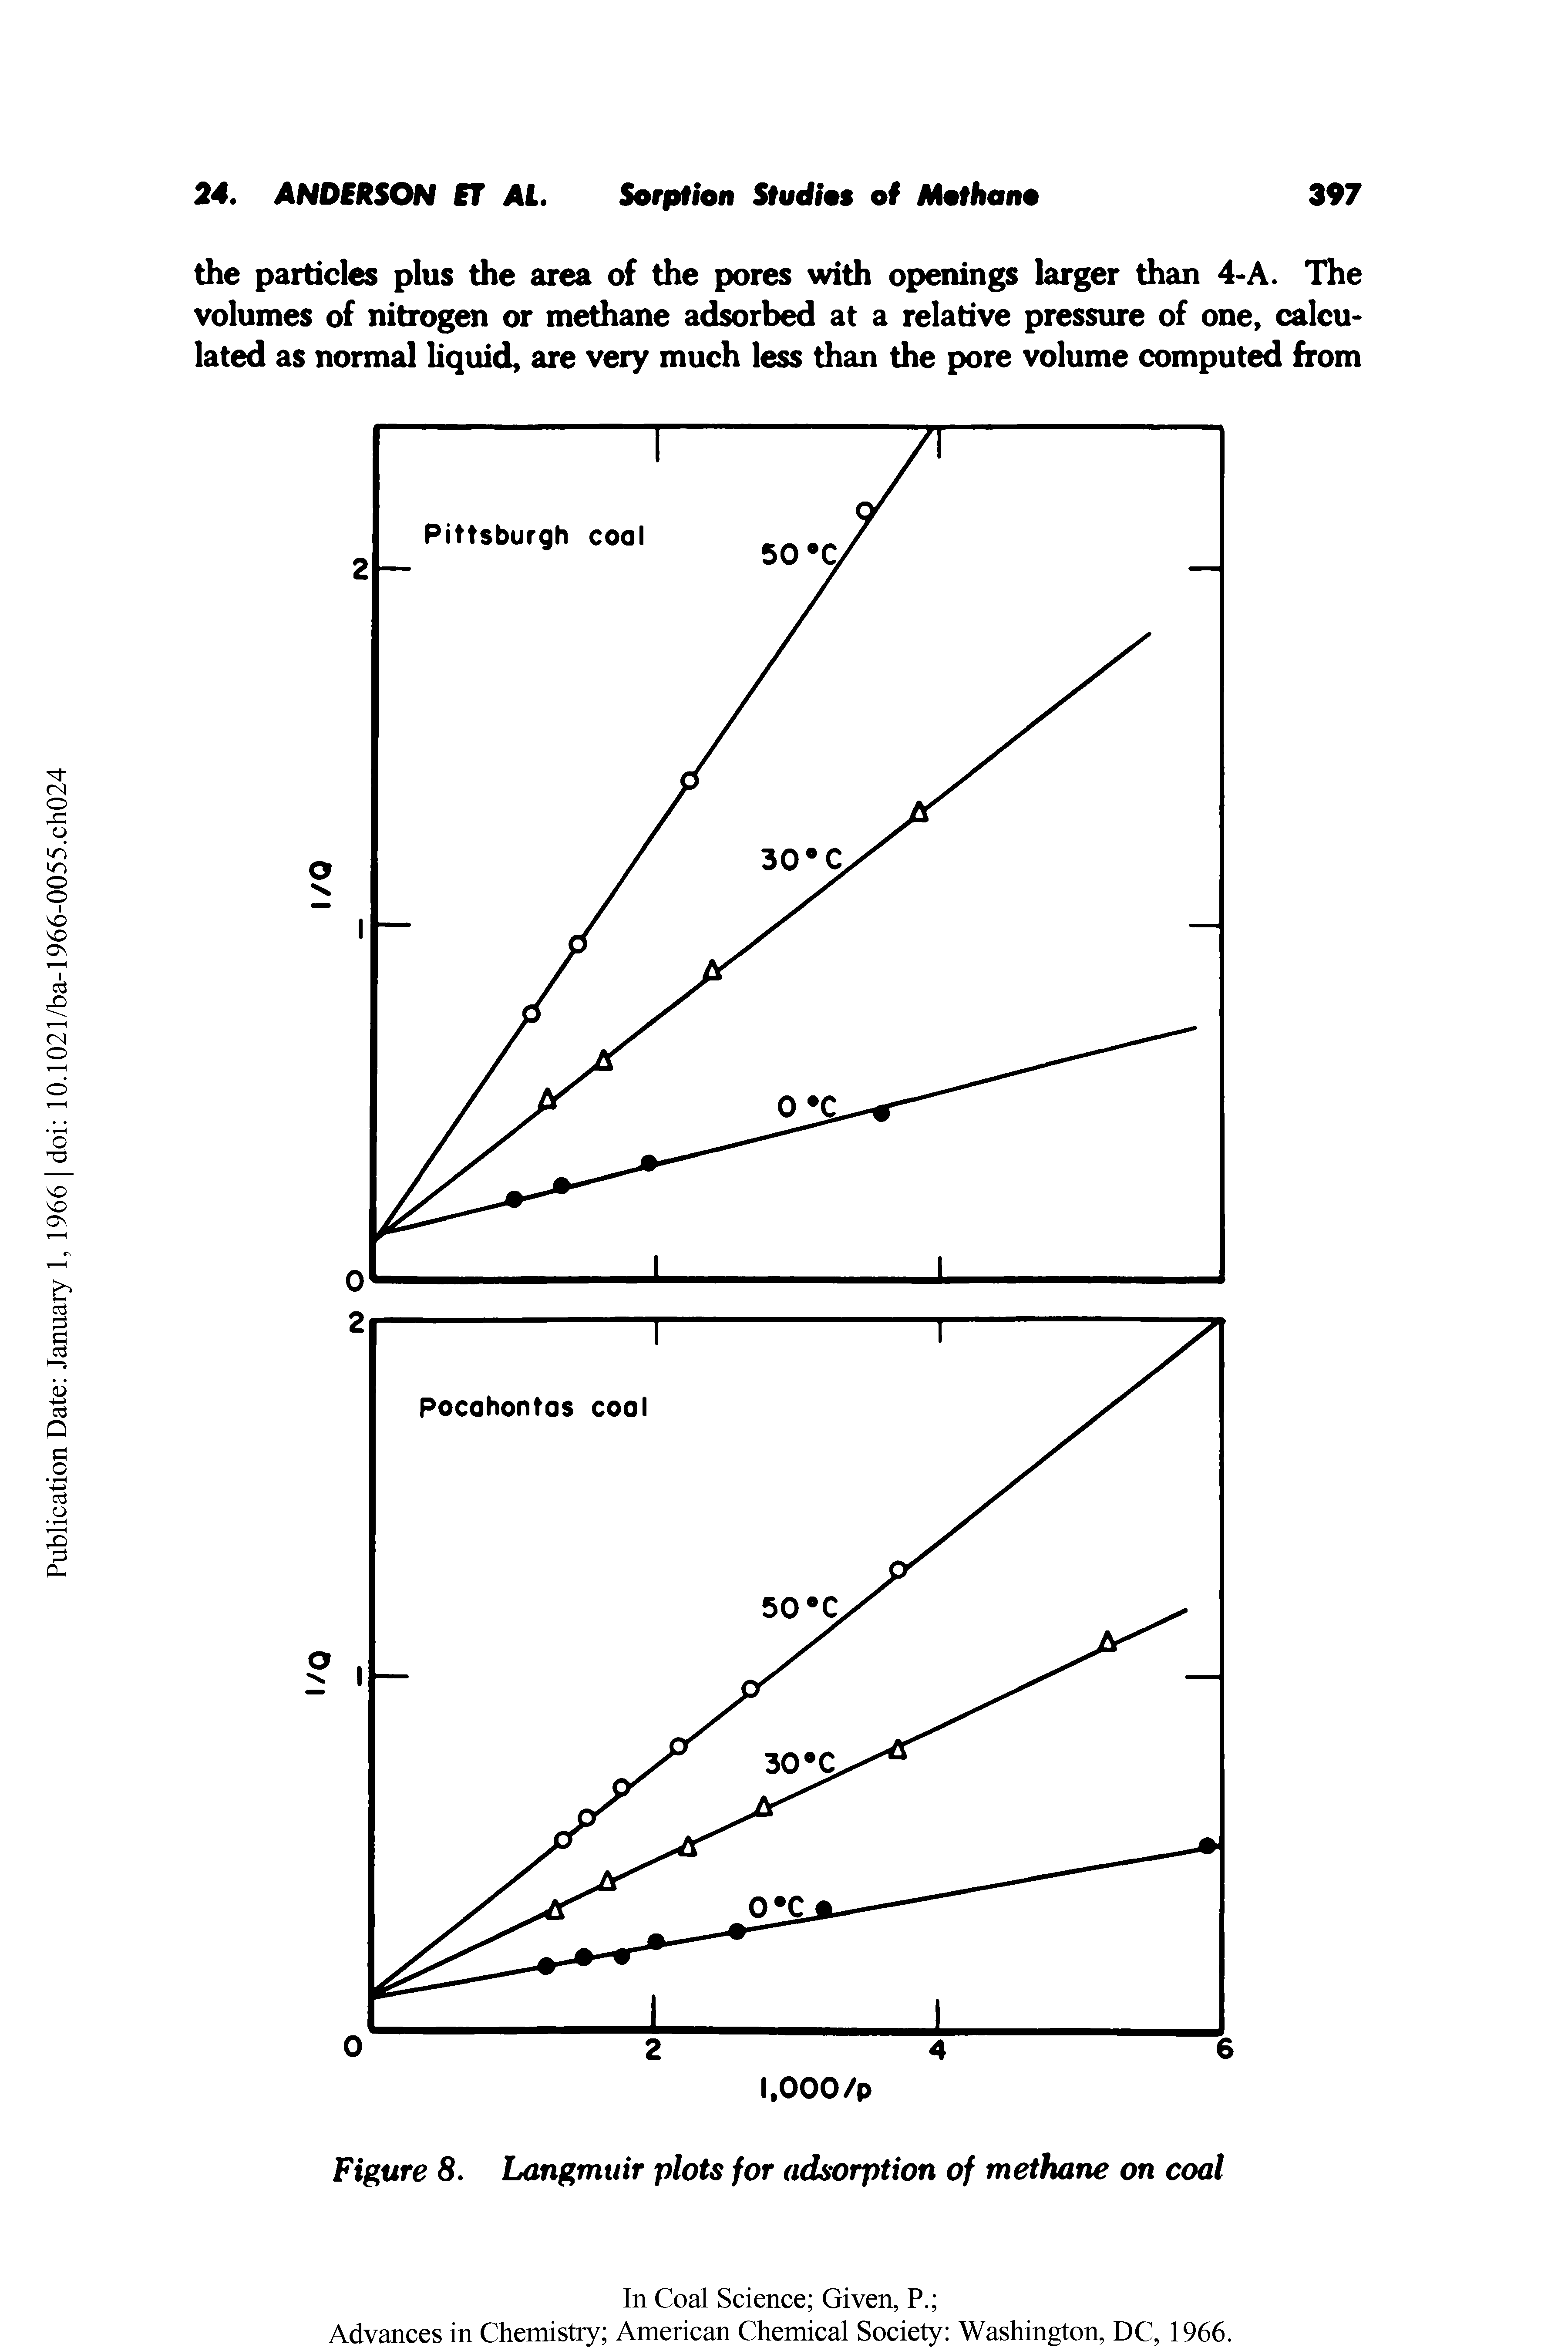 Figure 8. Langmuir plots for adsorption of methane on coal...